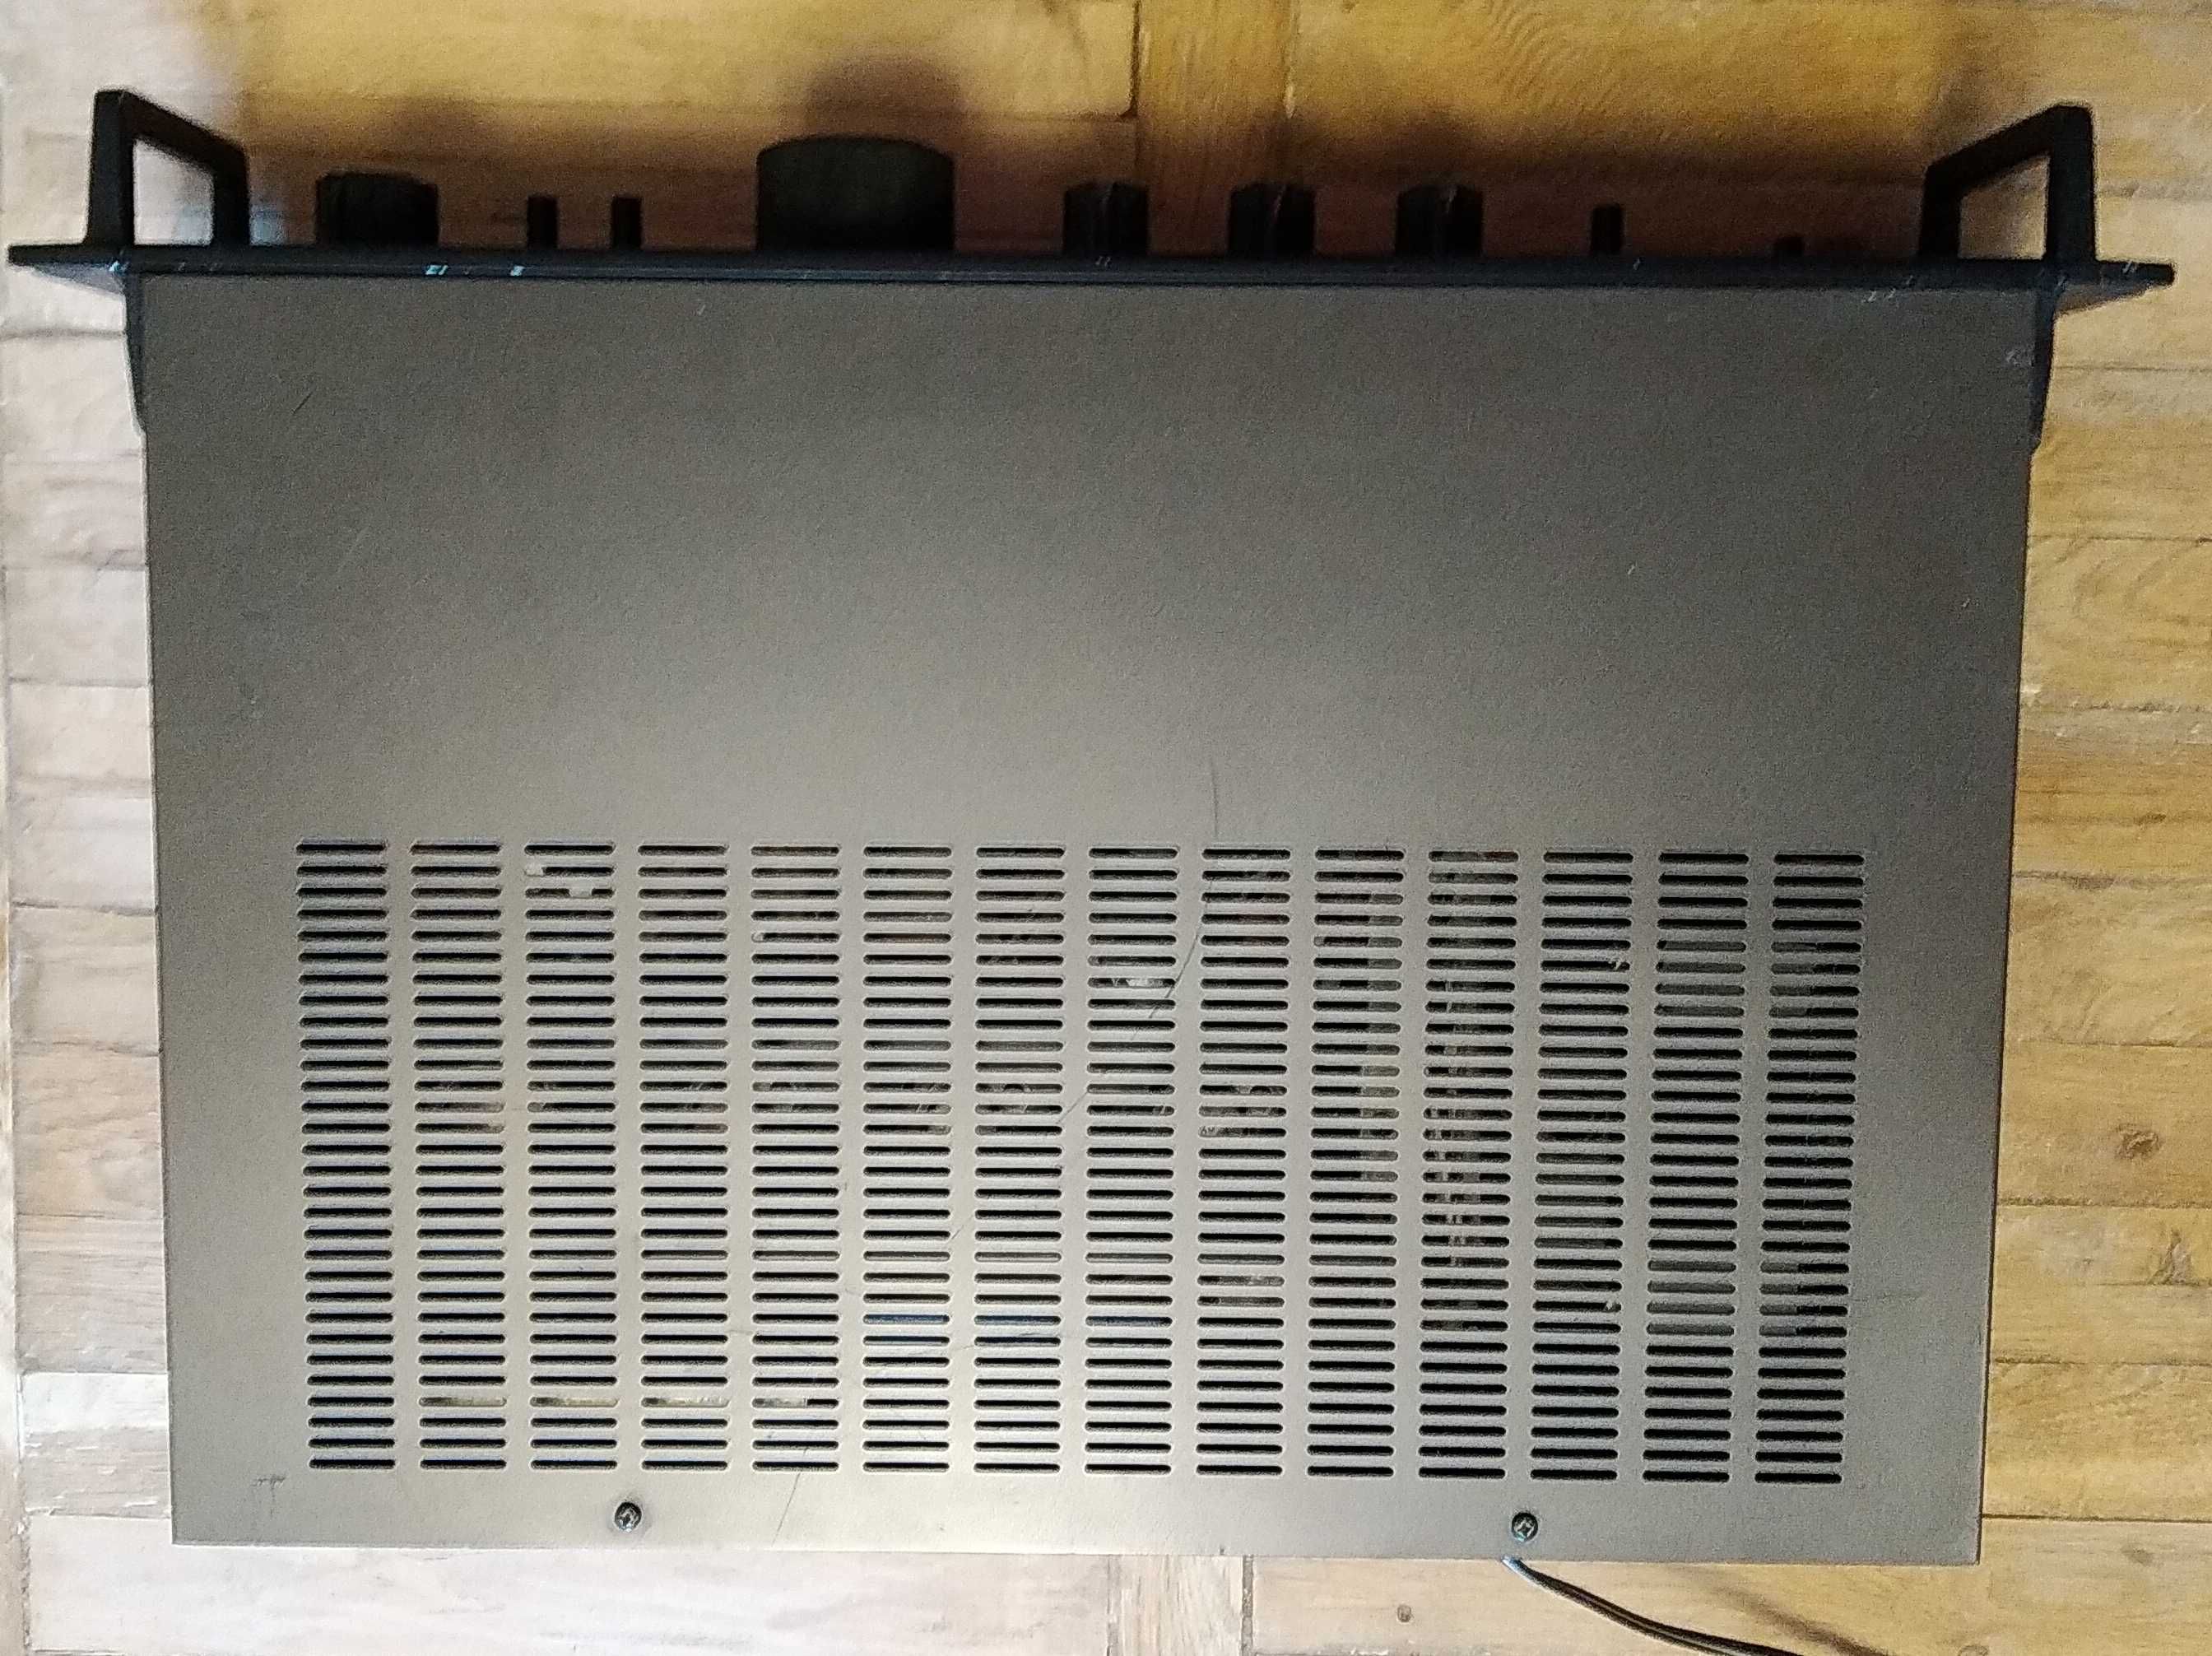 Sansui AU-217
Stereo Integrated Amplifier